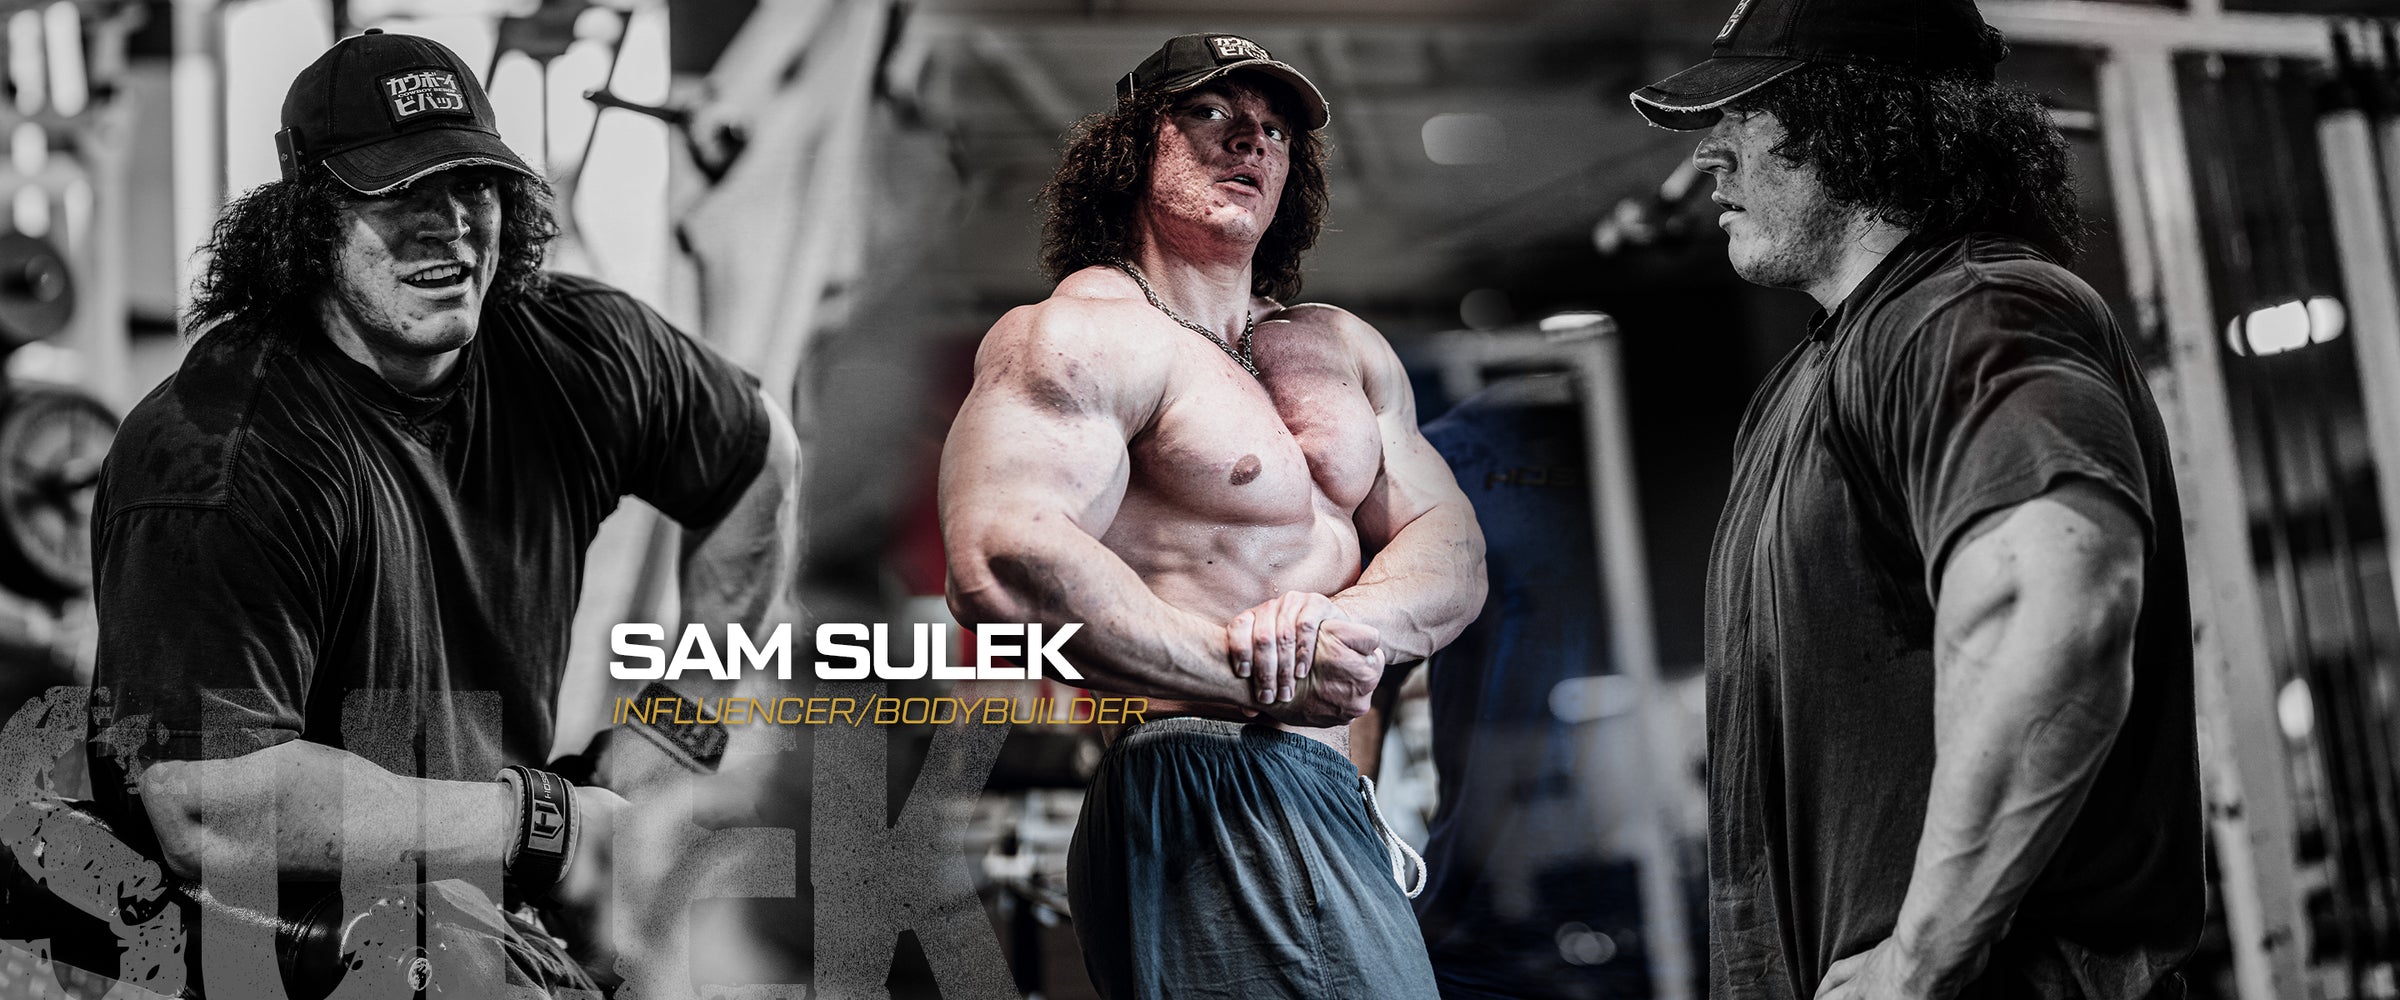 Hosstile Athlete Sam Sulek Bodybuilding Influencer